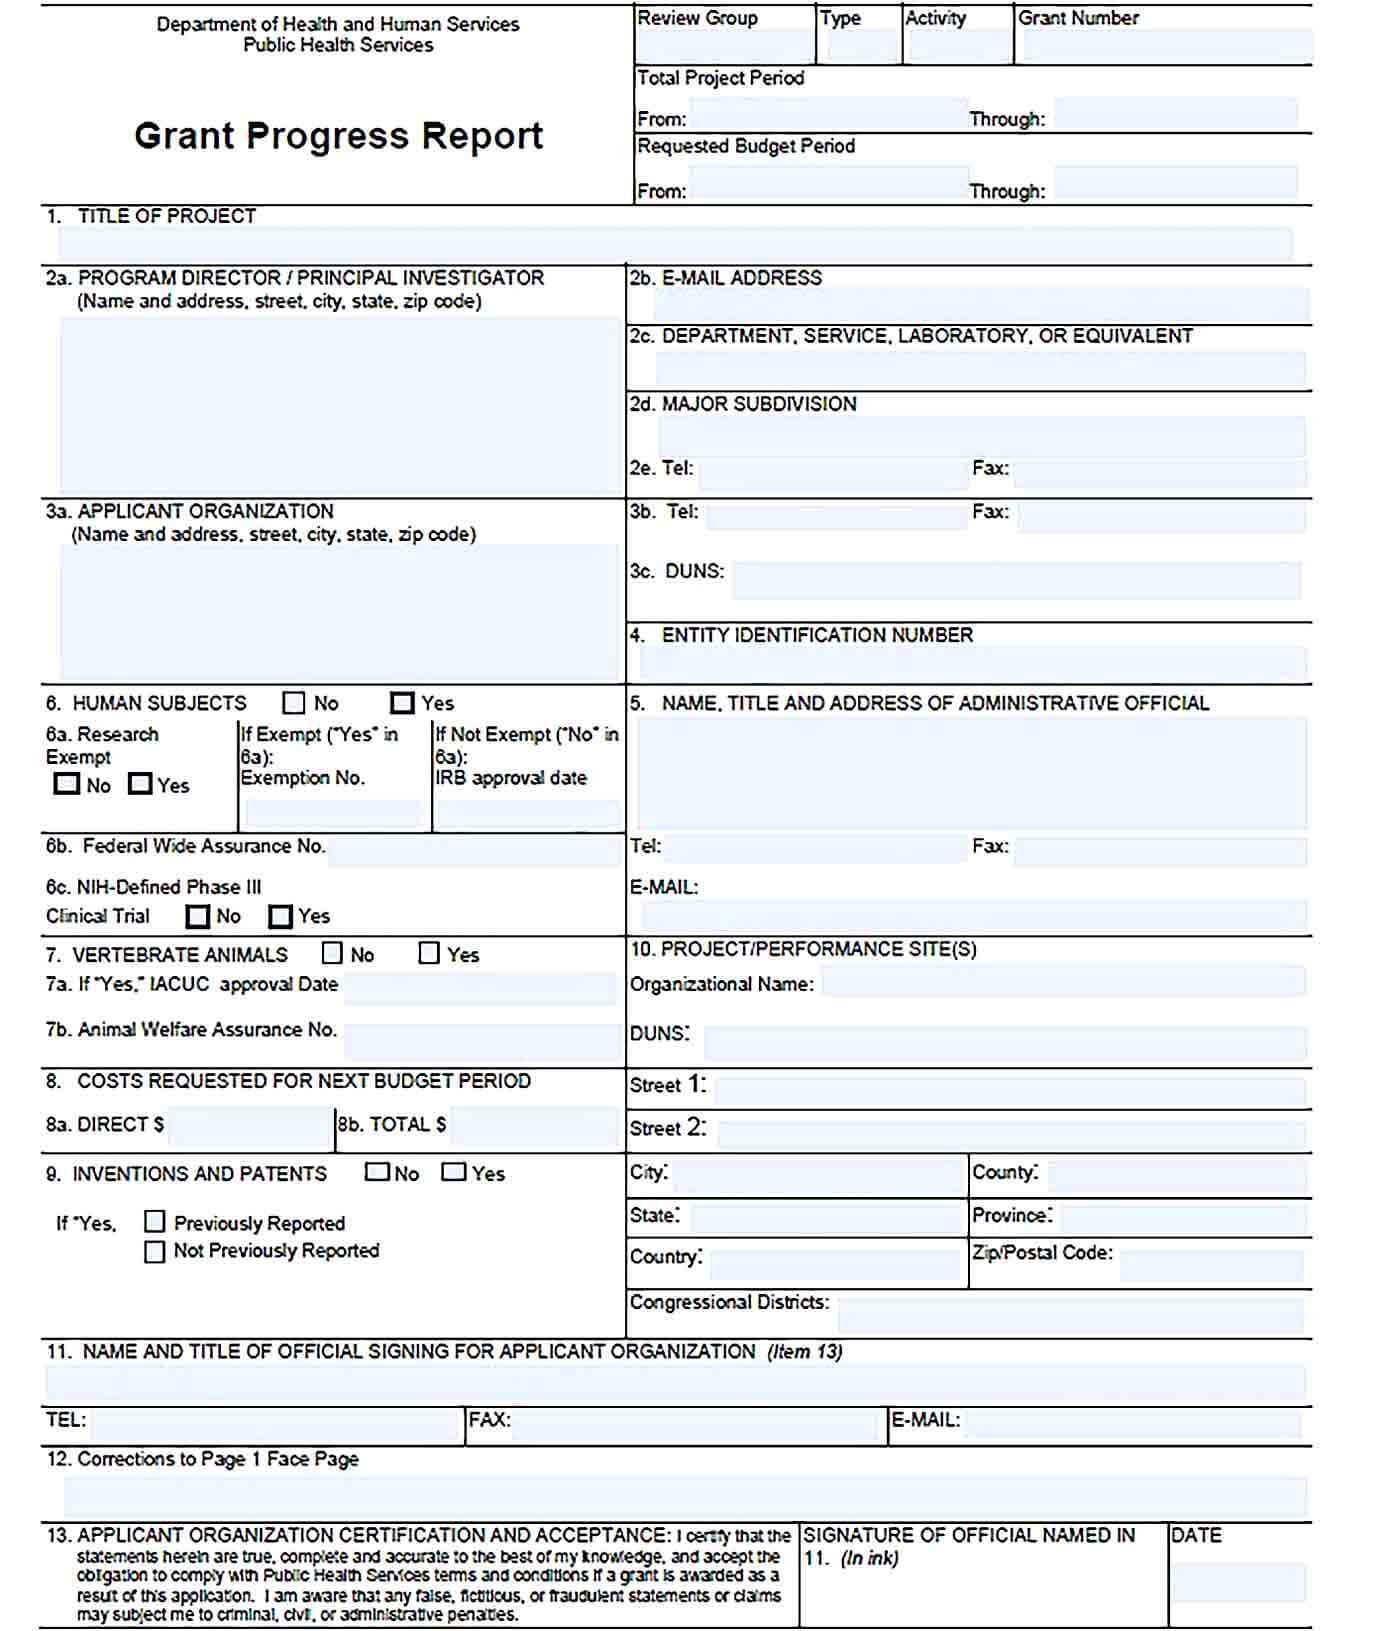 Sample Grant Progress Report Template